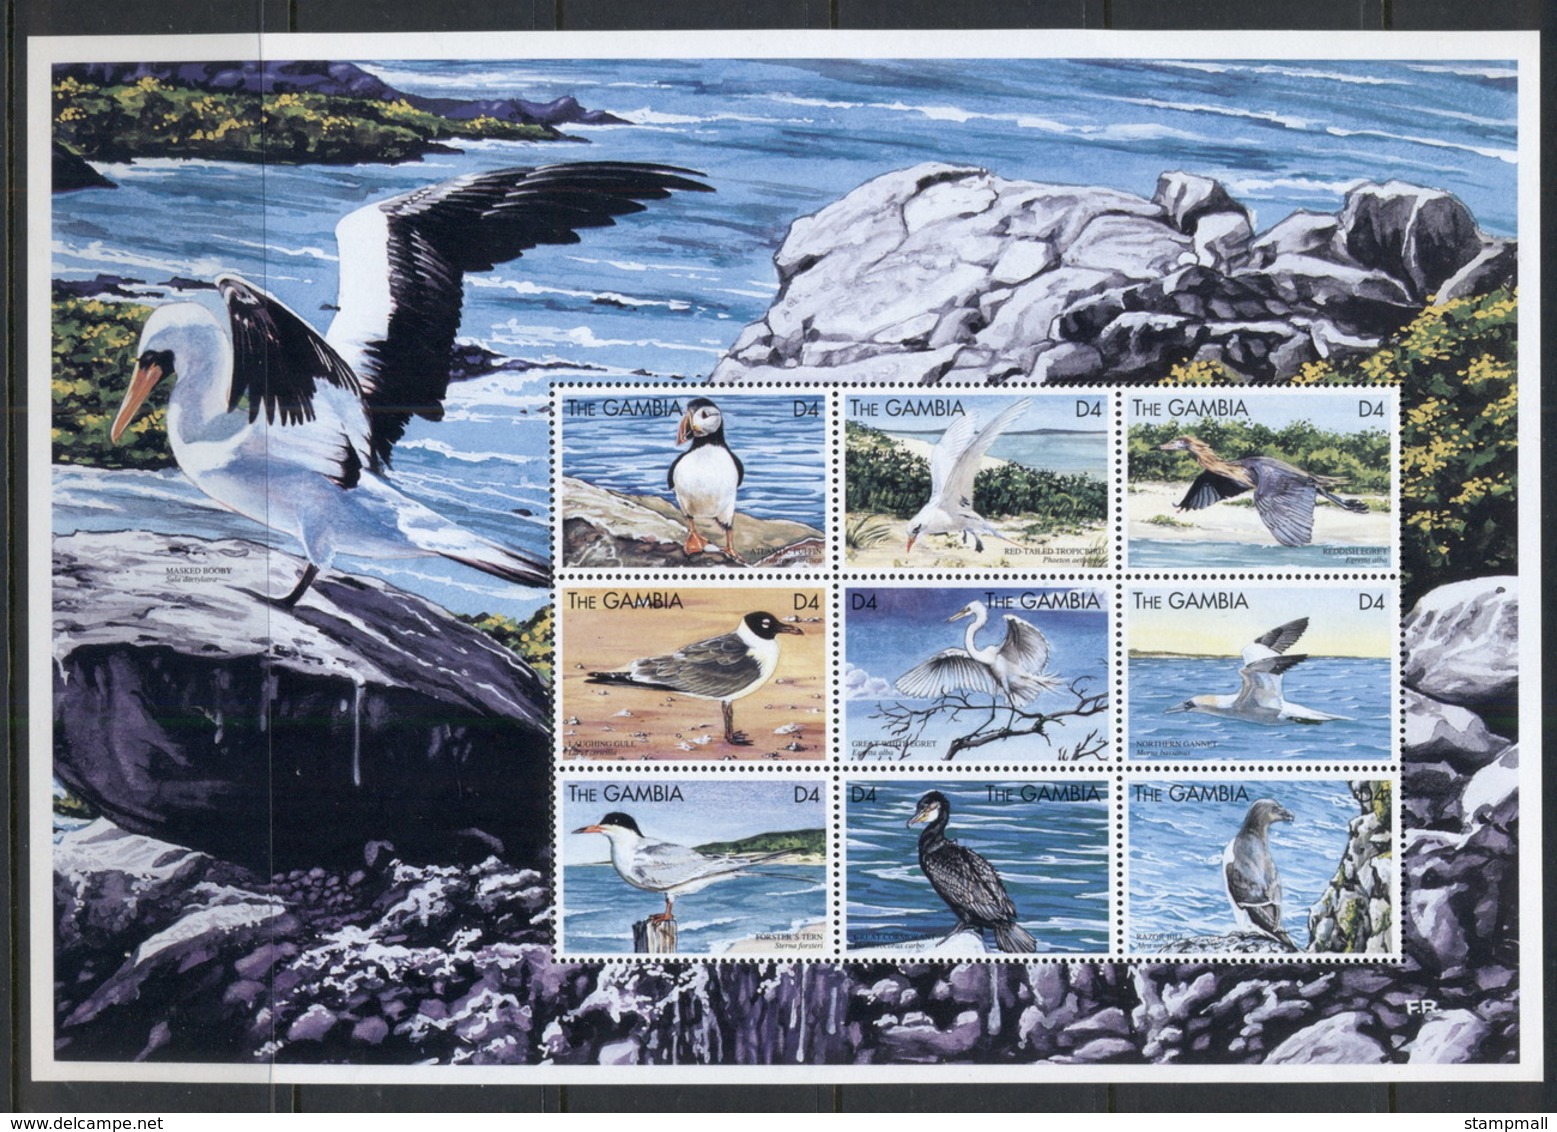 Gambia 1999 Seabirds Sheetlet MUH - Gambia (1965-...)